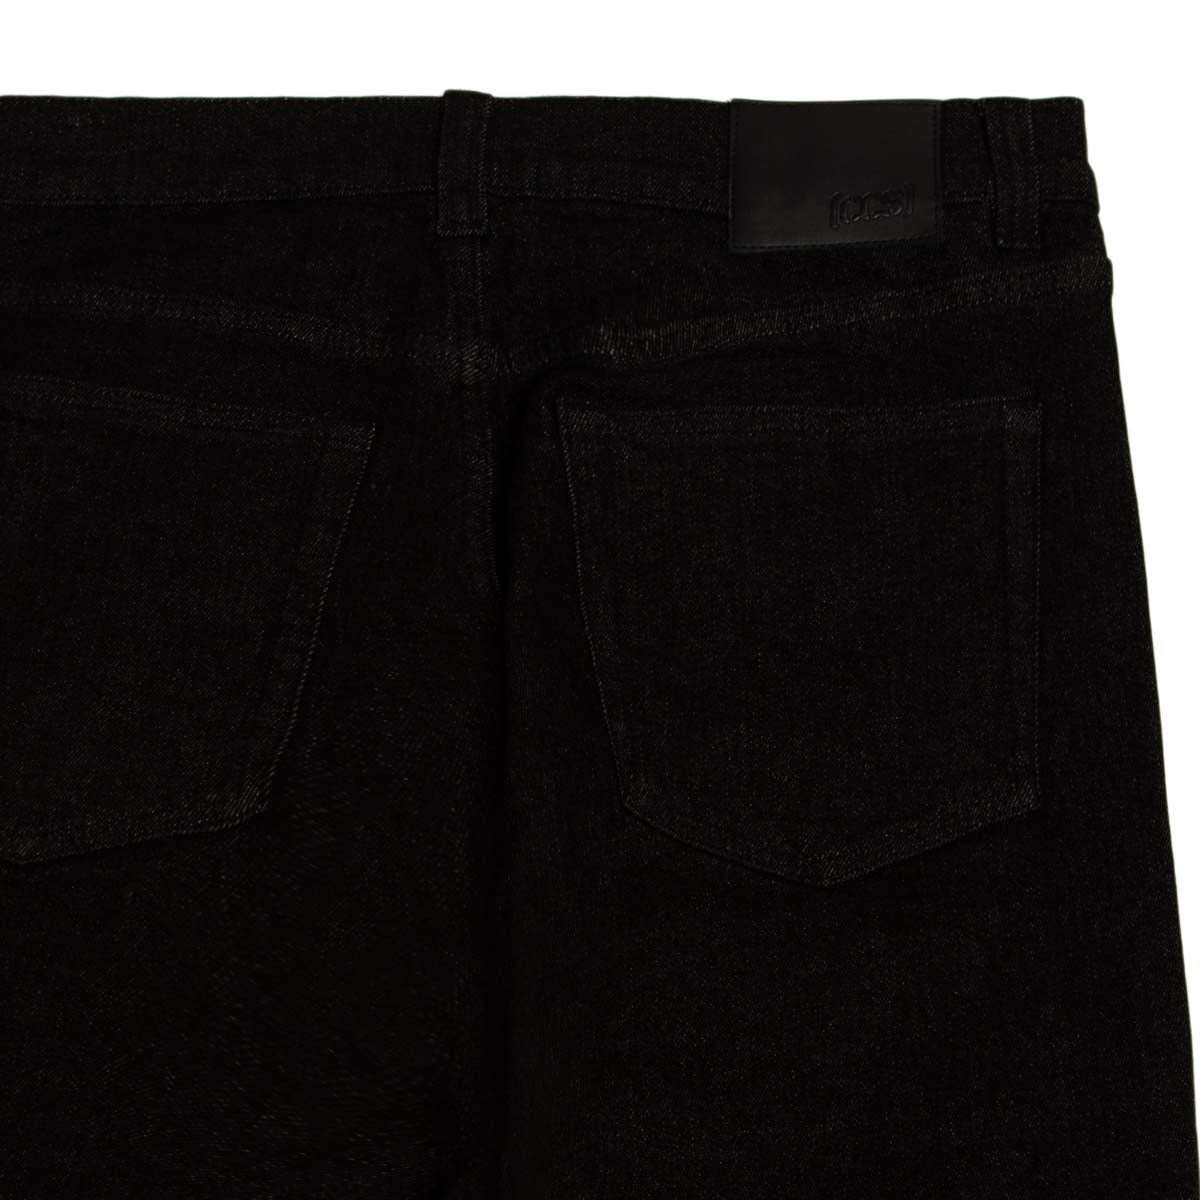 CCS 12oz Stretch Straight Denim Jeans - 12oz Black image 6